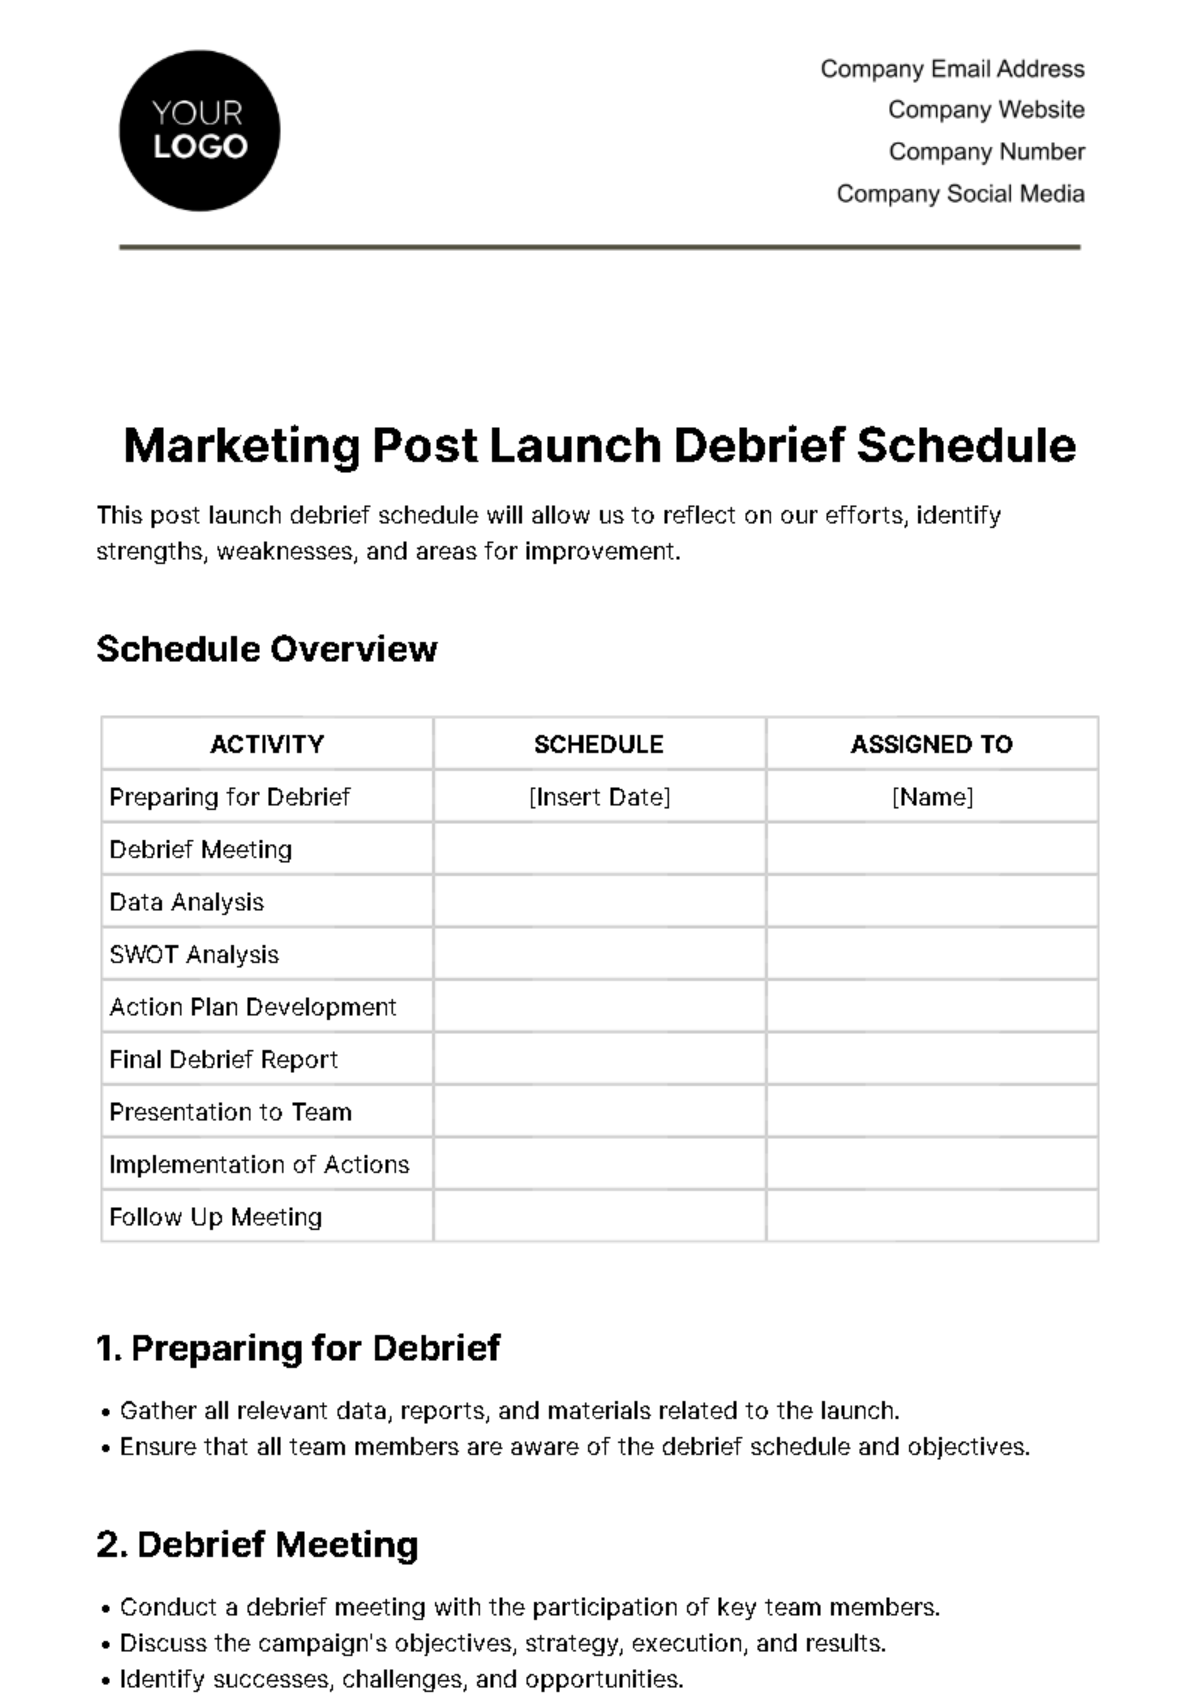 Free Marketing Post-Launch Debrief Schedule Template